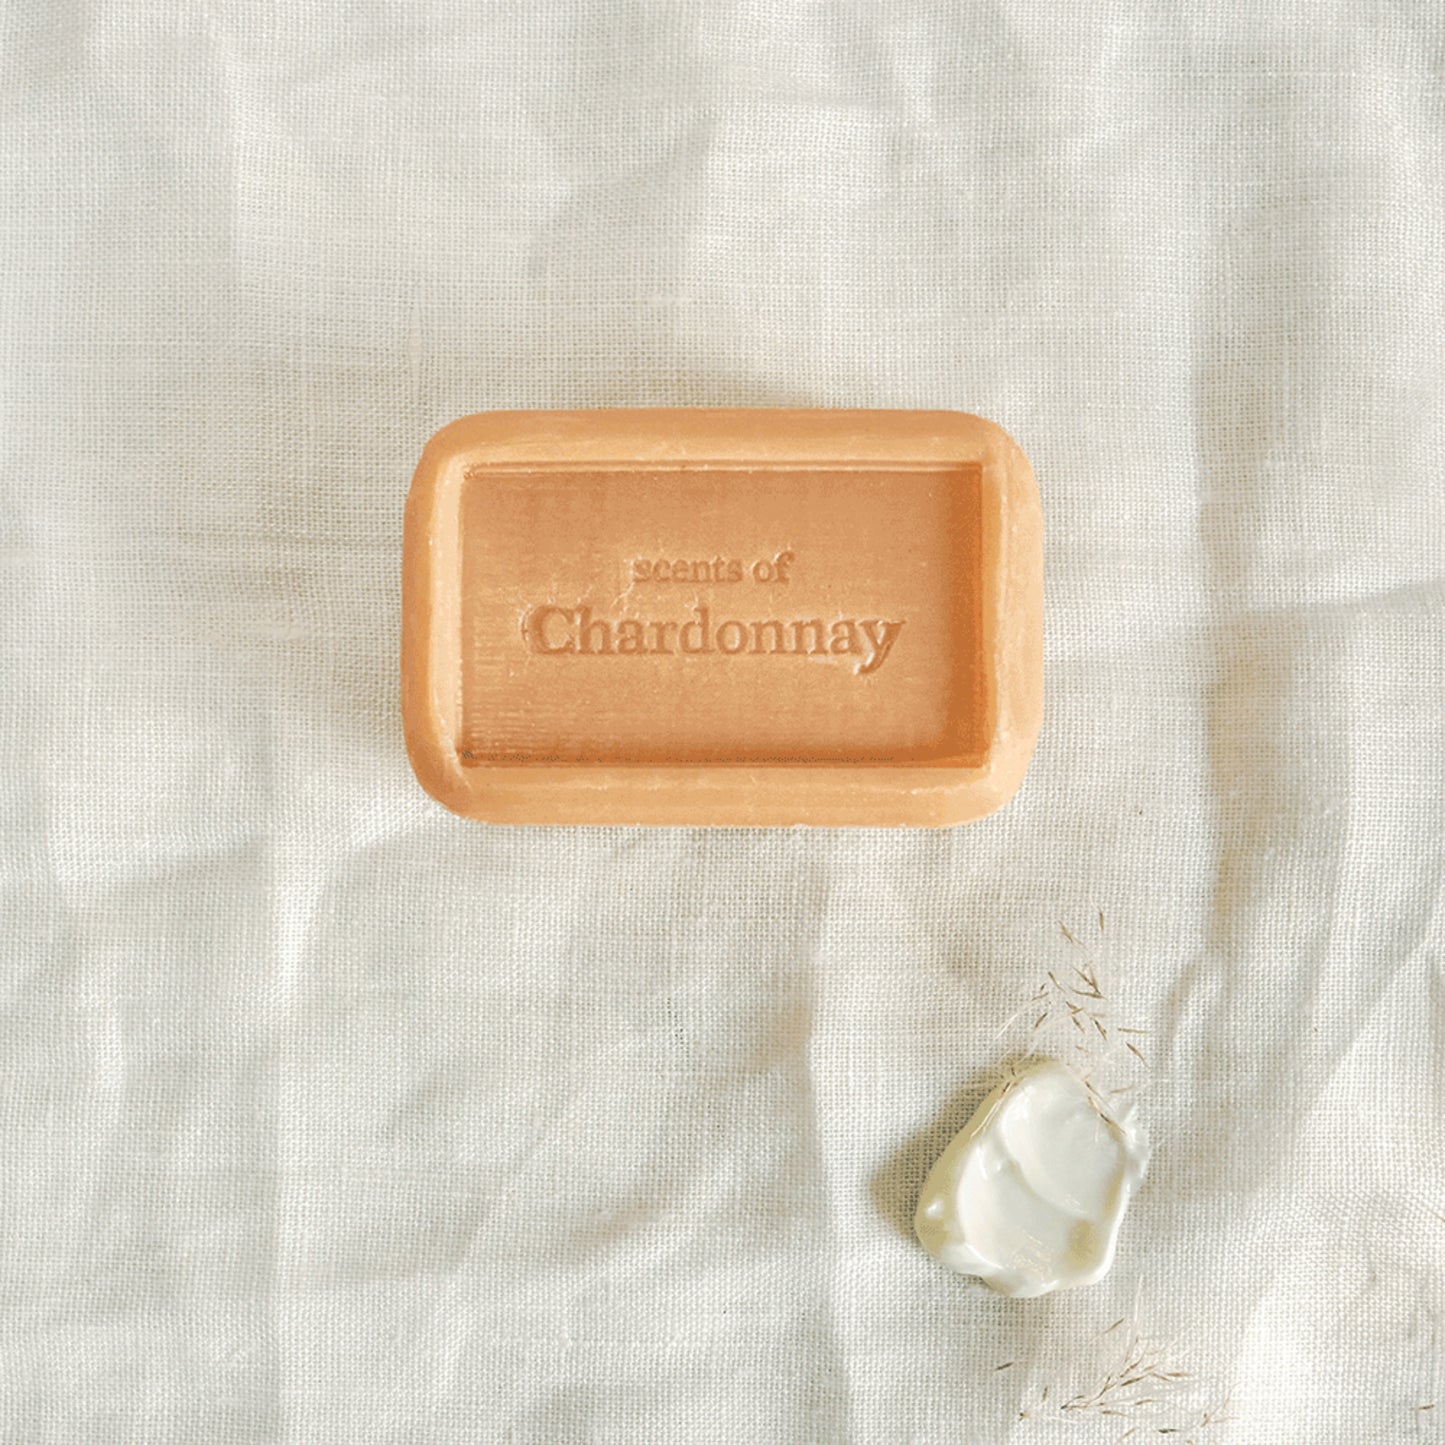 Chardonnay Soap by Vinoos